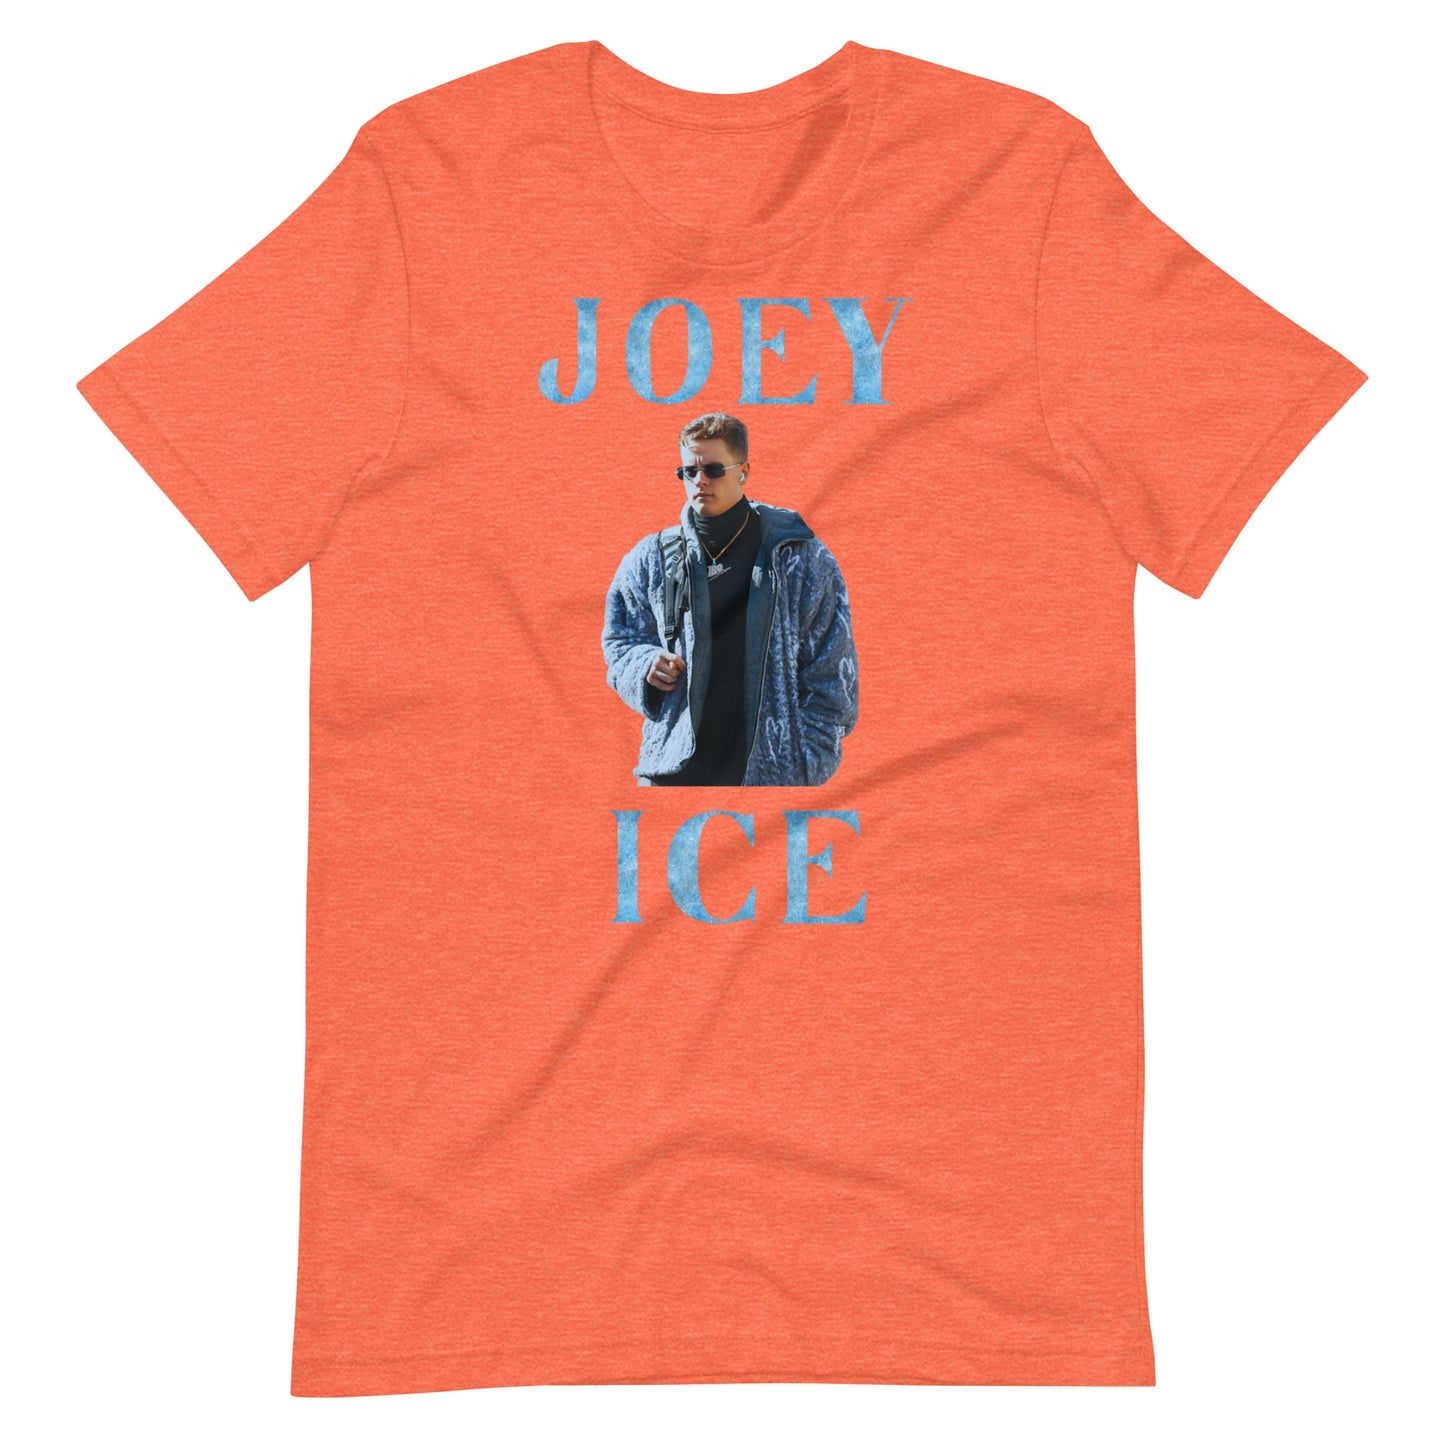 Joey Ice T-Shirt